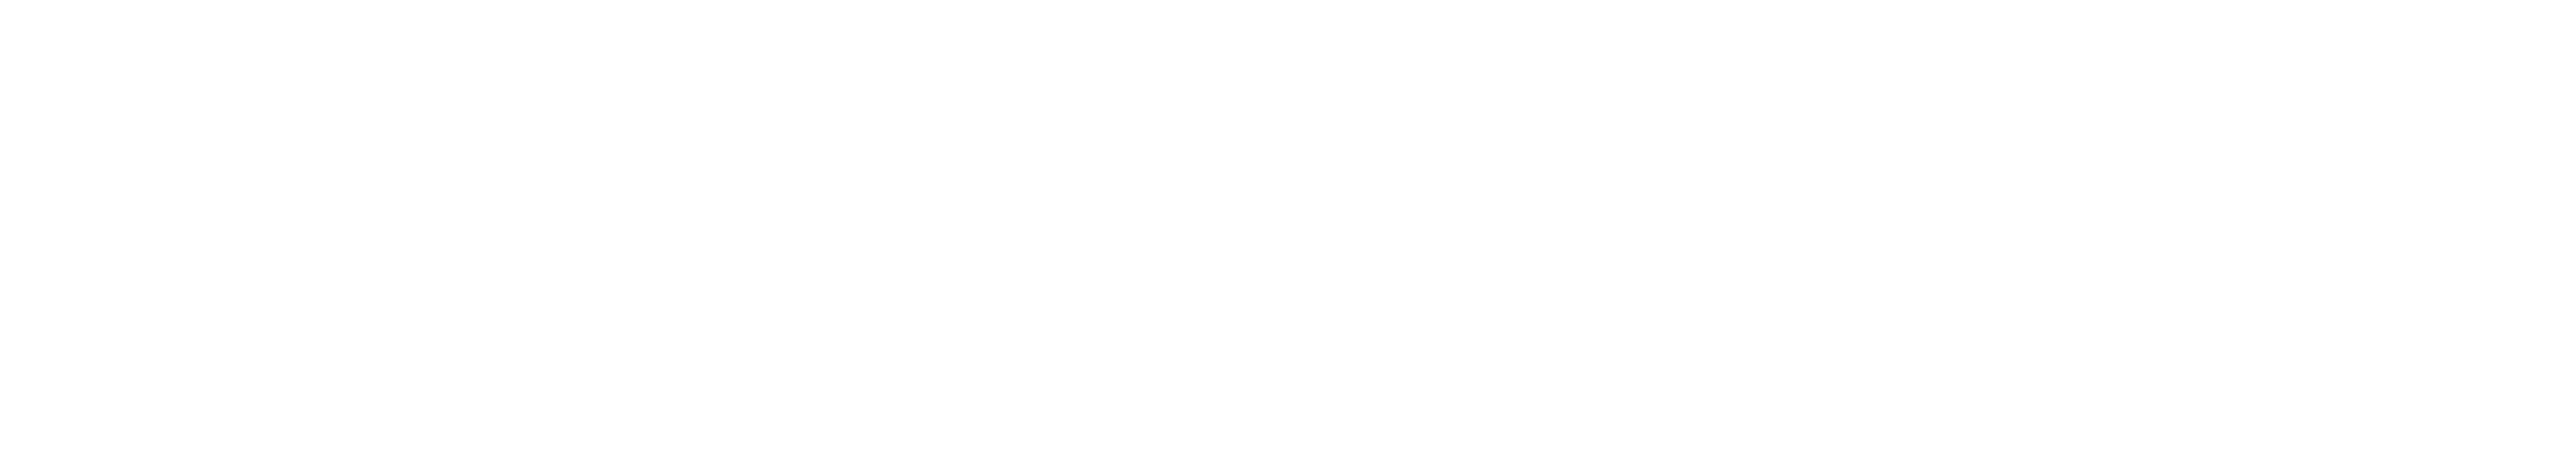 Polychroma logo